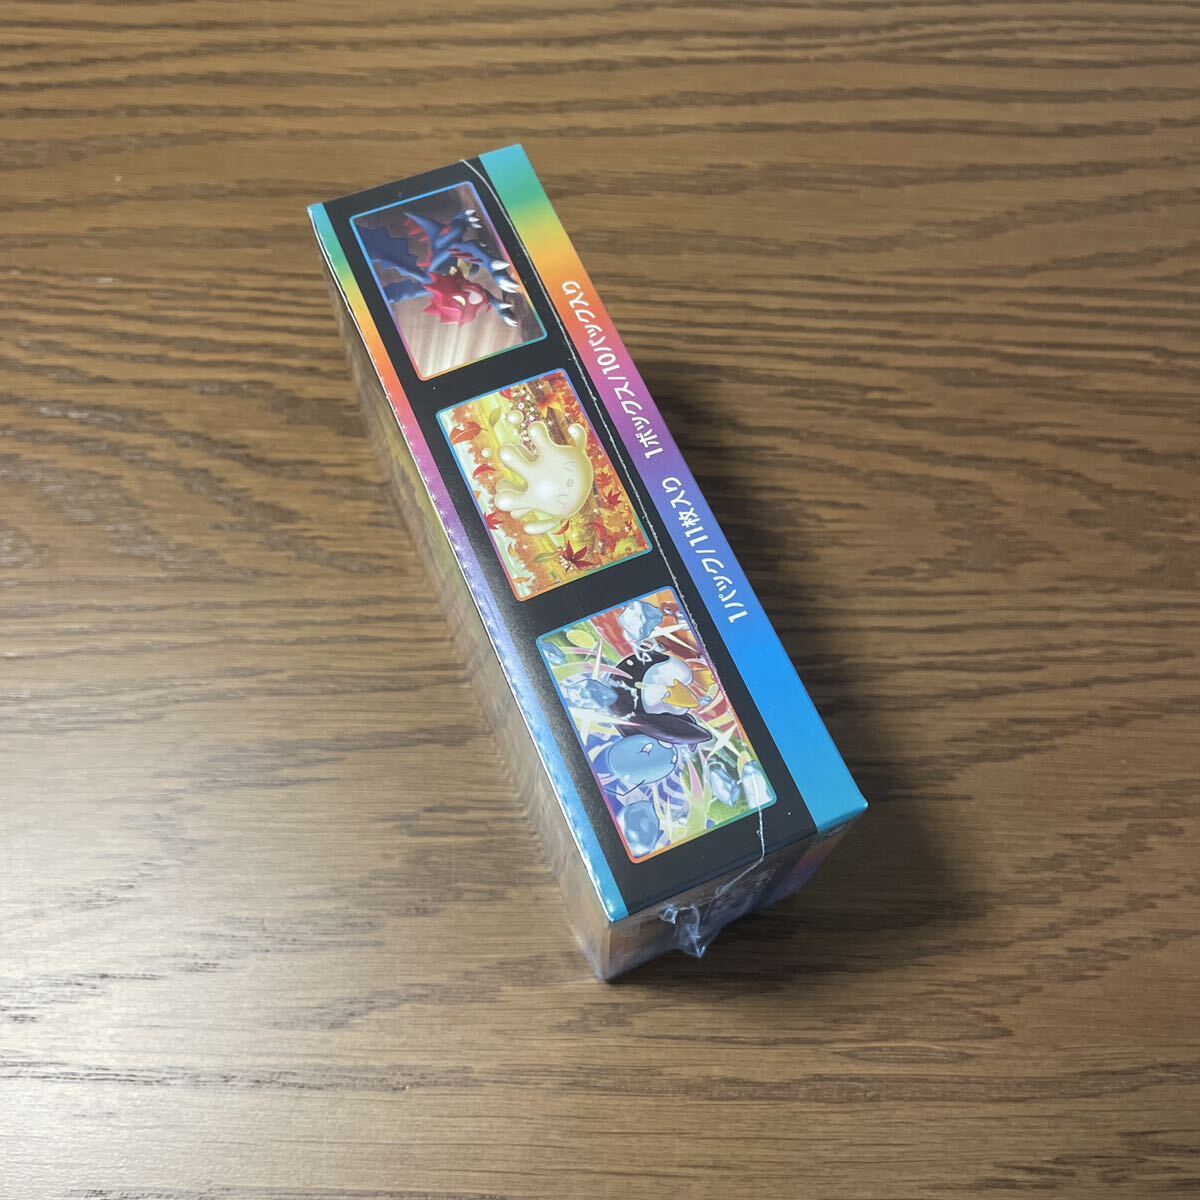 [ новый товар нераспечатанный ] Pokemon Card Game VMAXklai Max BOX